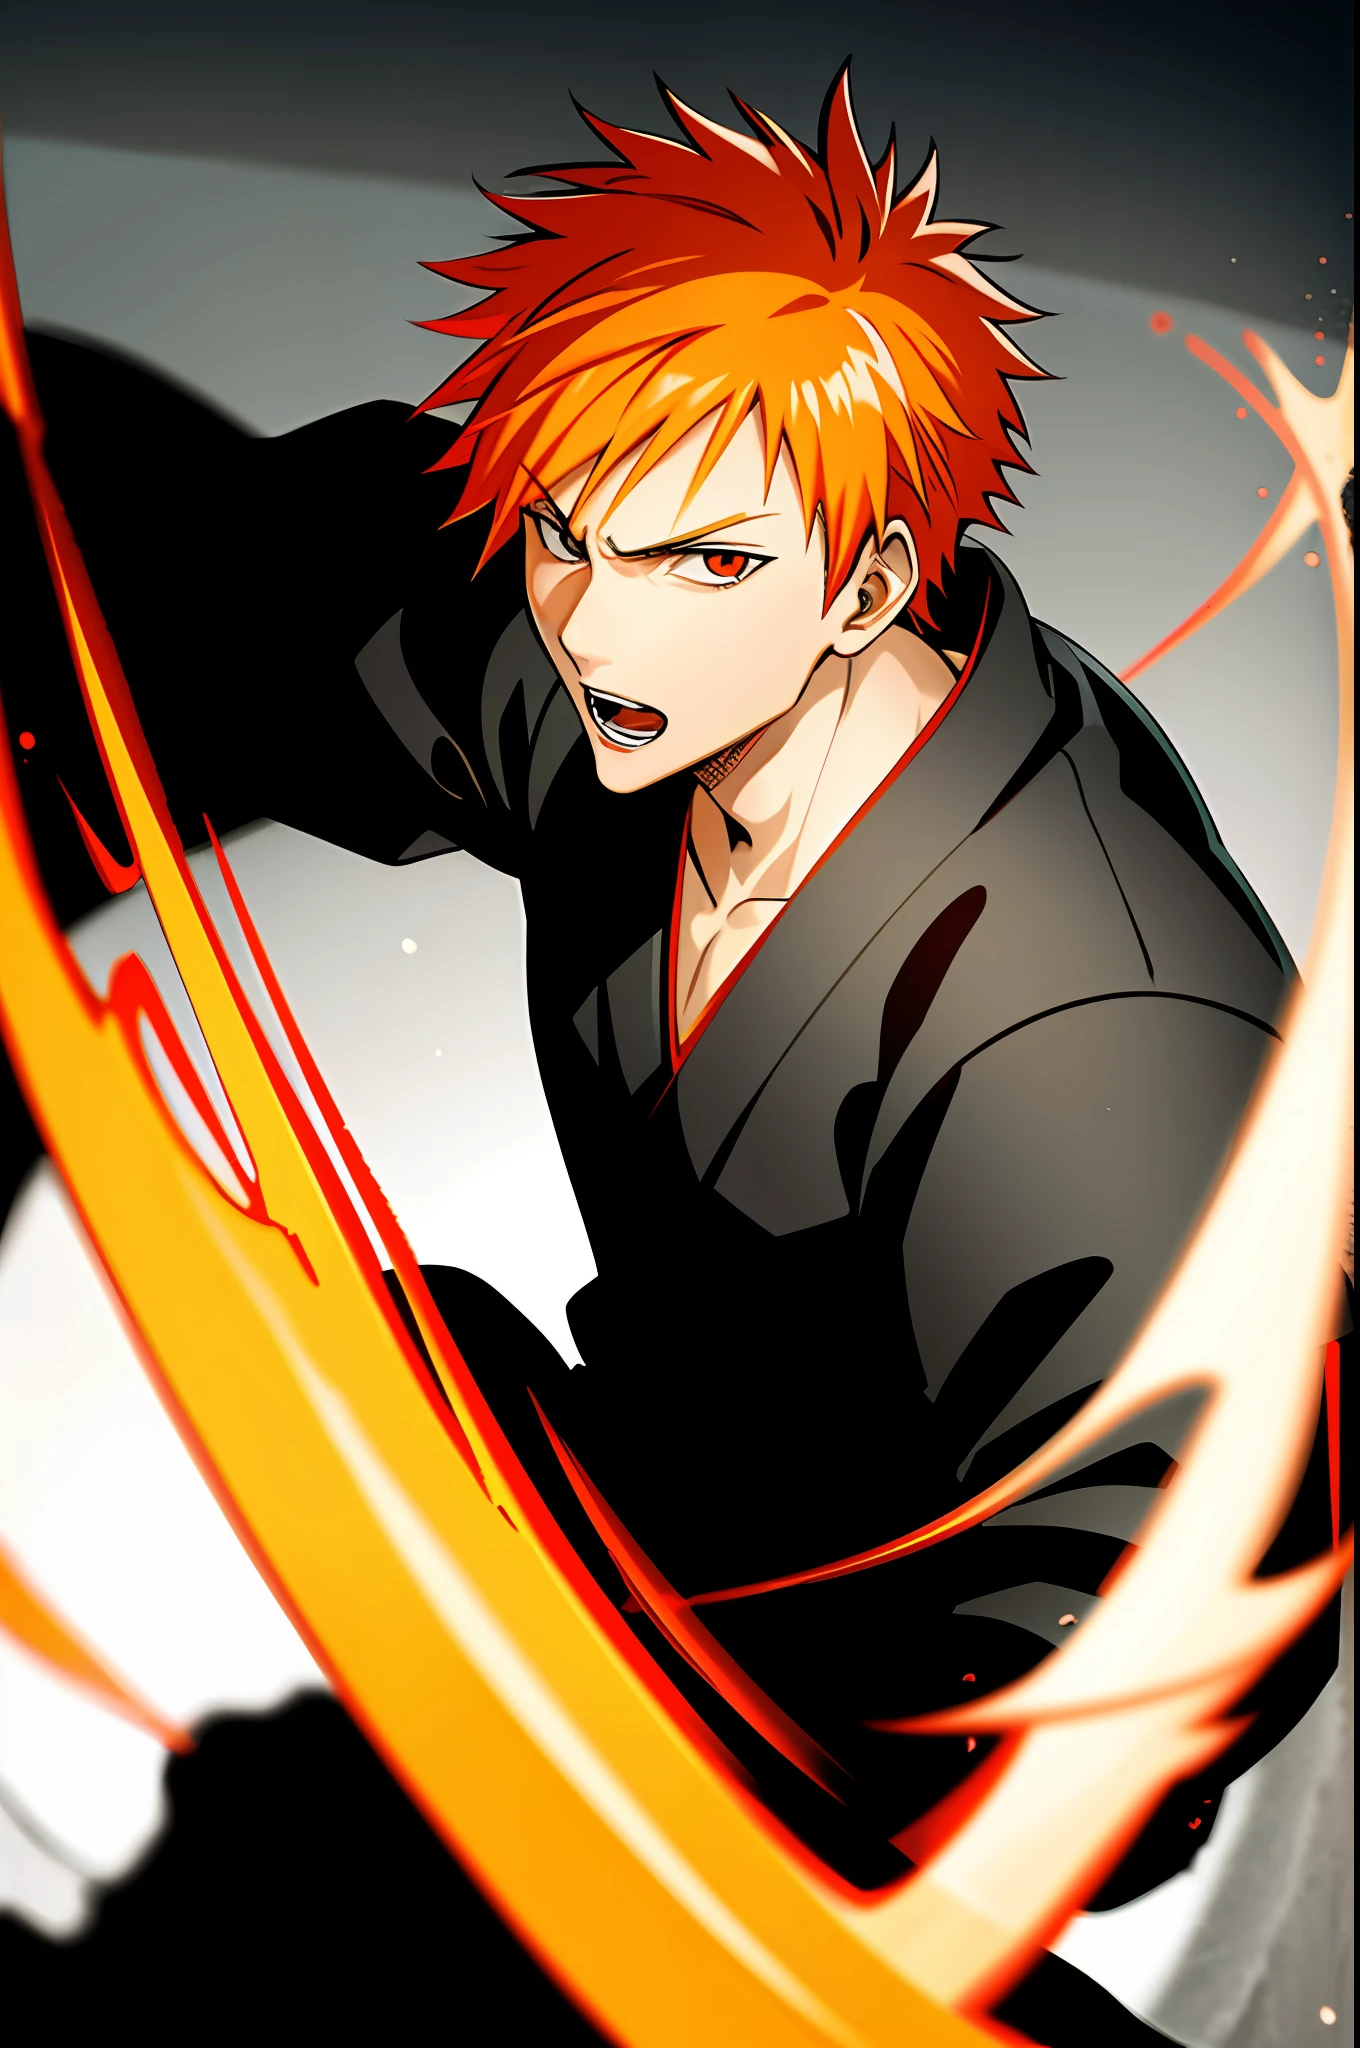 ichigo/Bleach/,short orange hair,black kimono,close up,ultra detailed face,best quality,city background